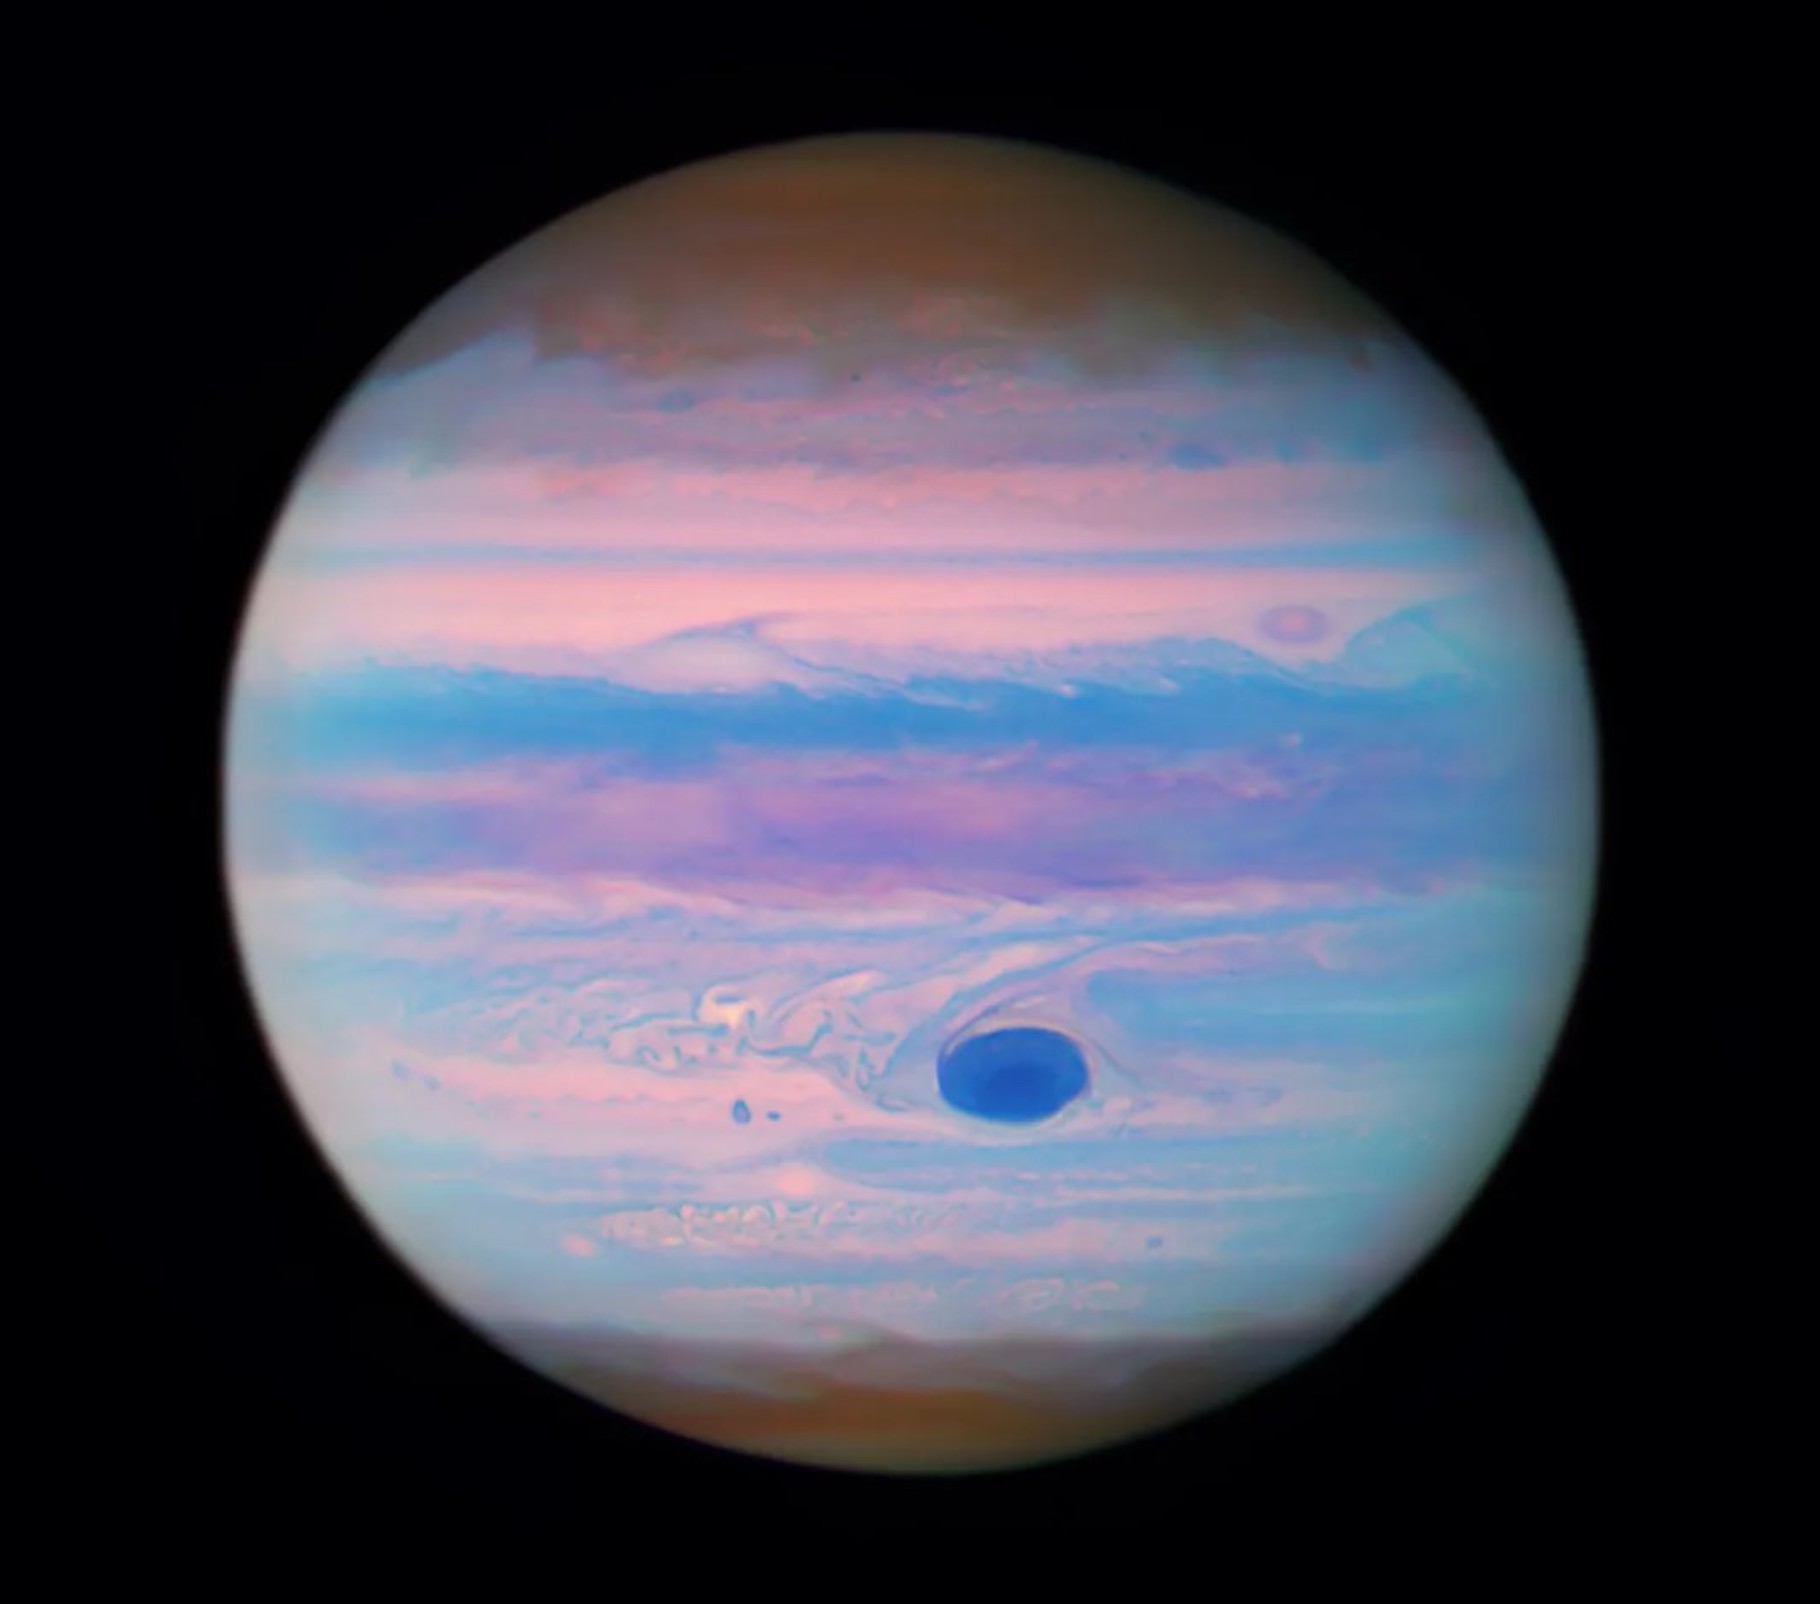 Le télescope spatial Hubble a révélé une nouvelle vue de Jupiter en ultraviolet. © Nasa, ESA, M. Wong, University of California - Berkeley ; Processing : Gladys Kober, Nasa, Catholic University of America